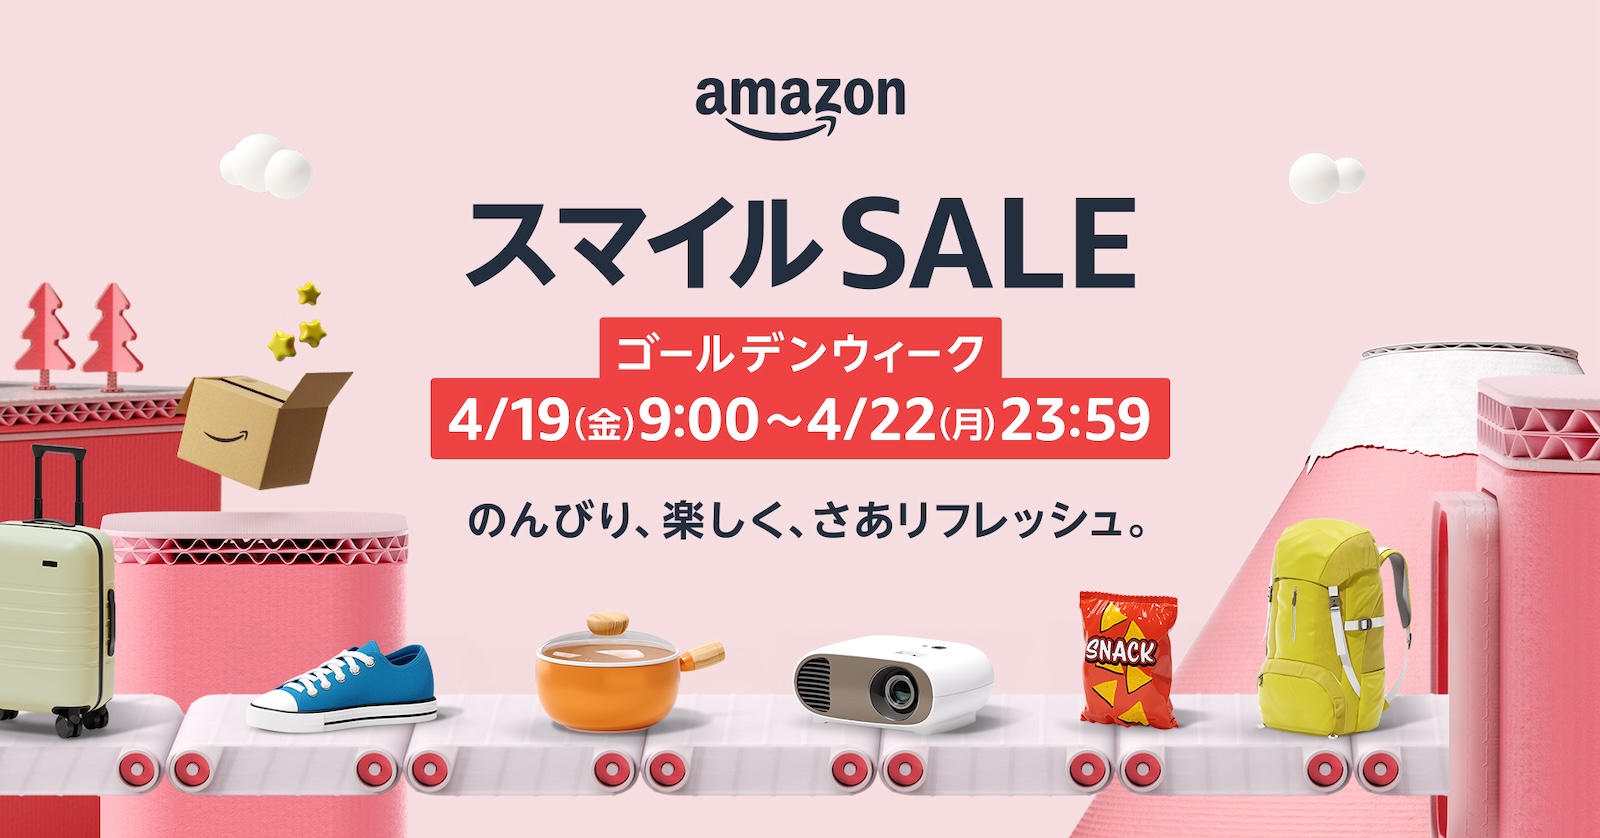 Amazon Smile Sale